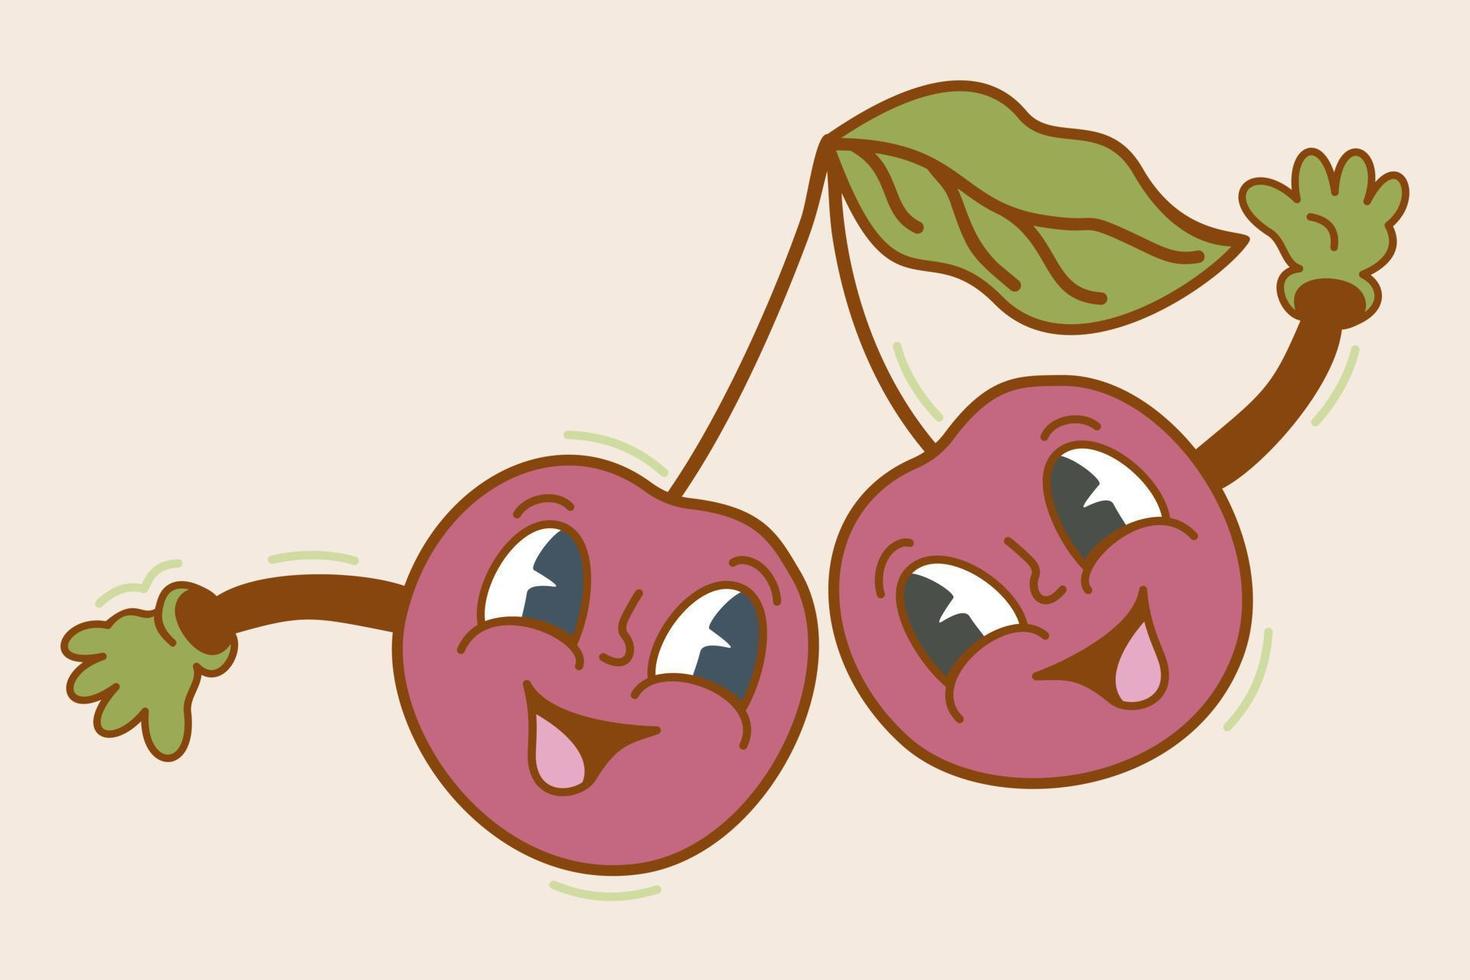 Cherries. Retro cartoon illustration. Style of 1970-s. Vector isolated on light background.